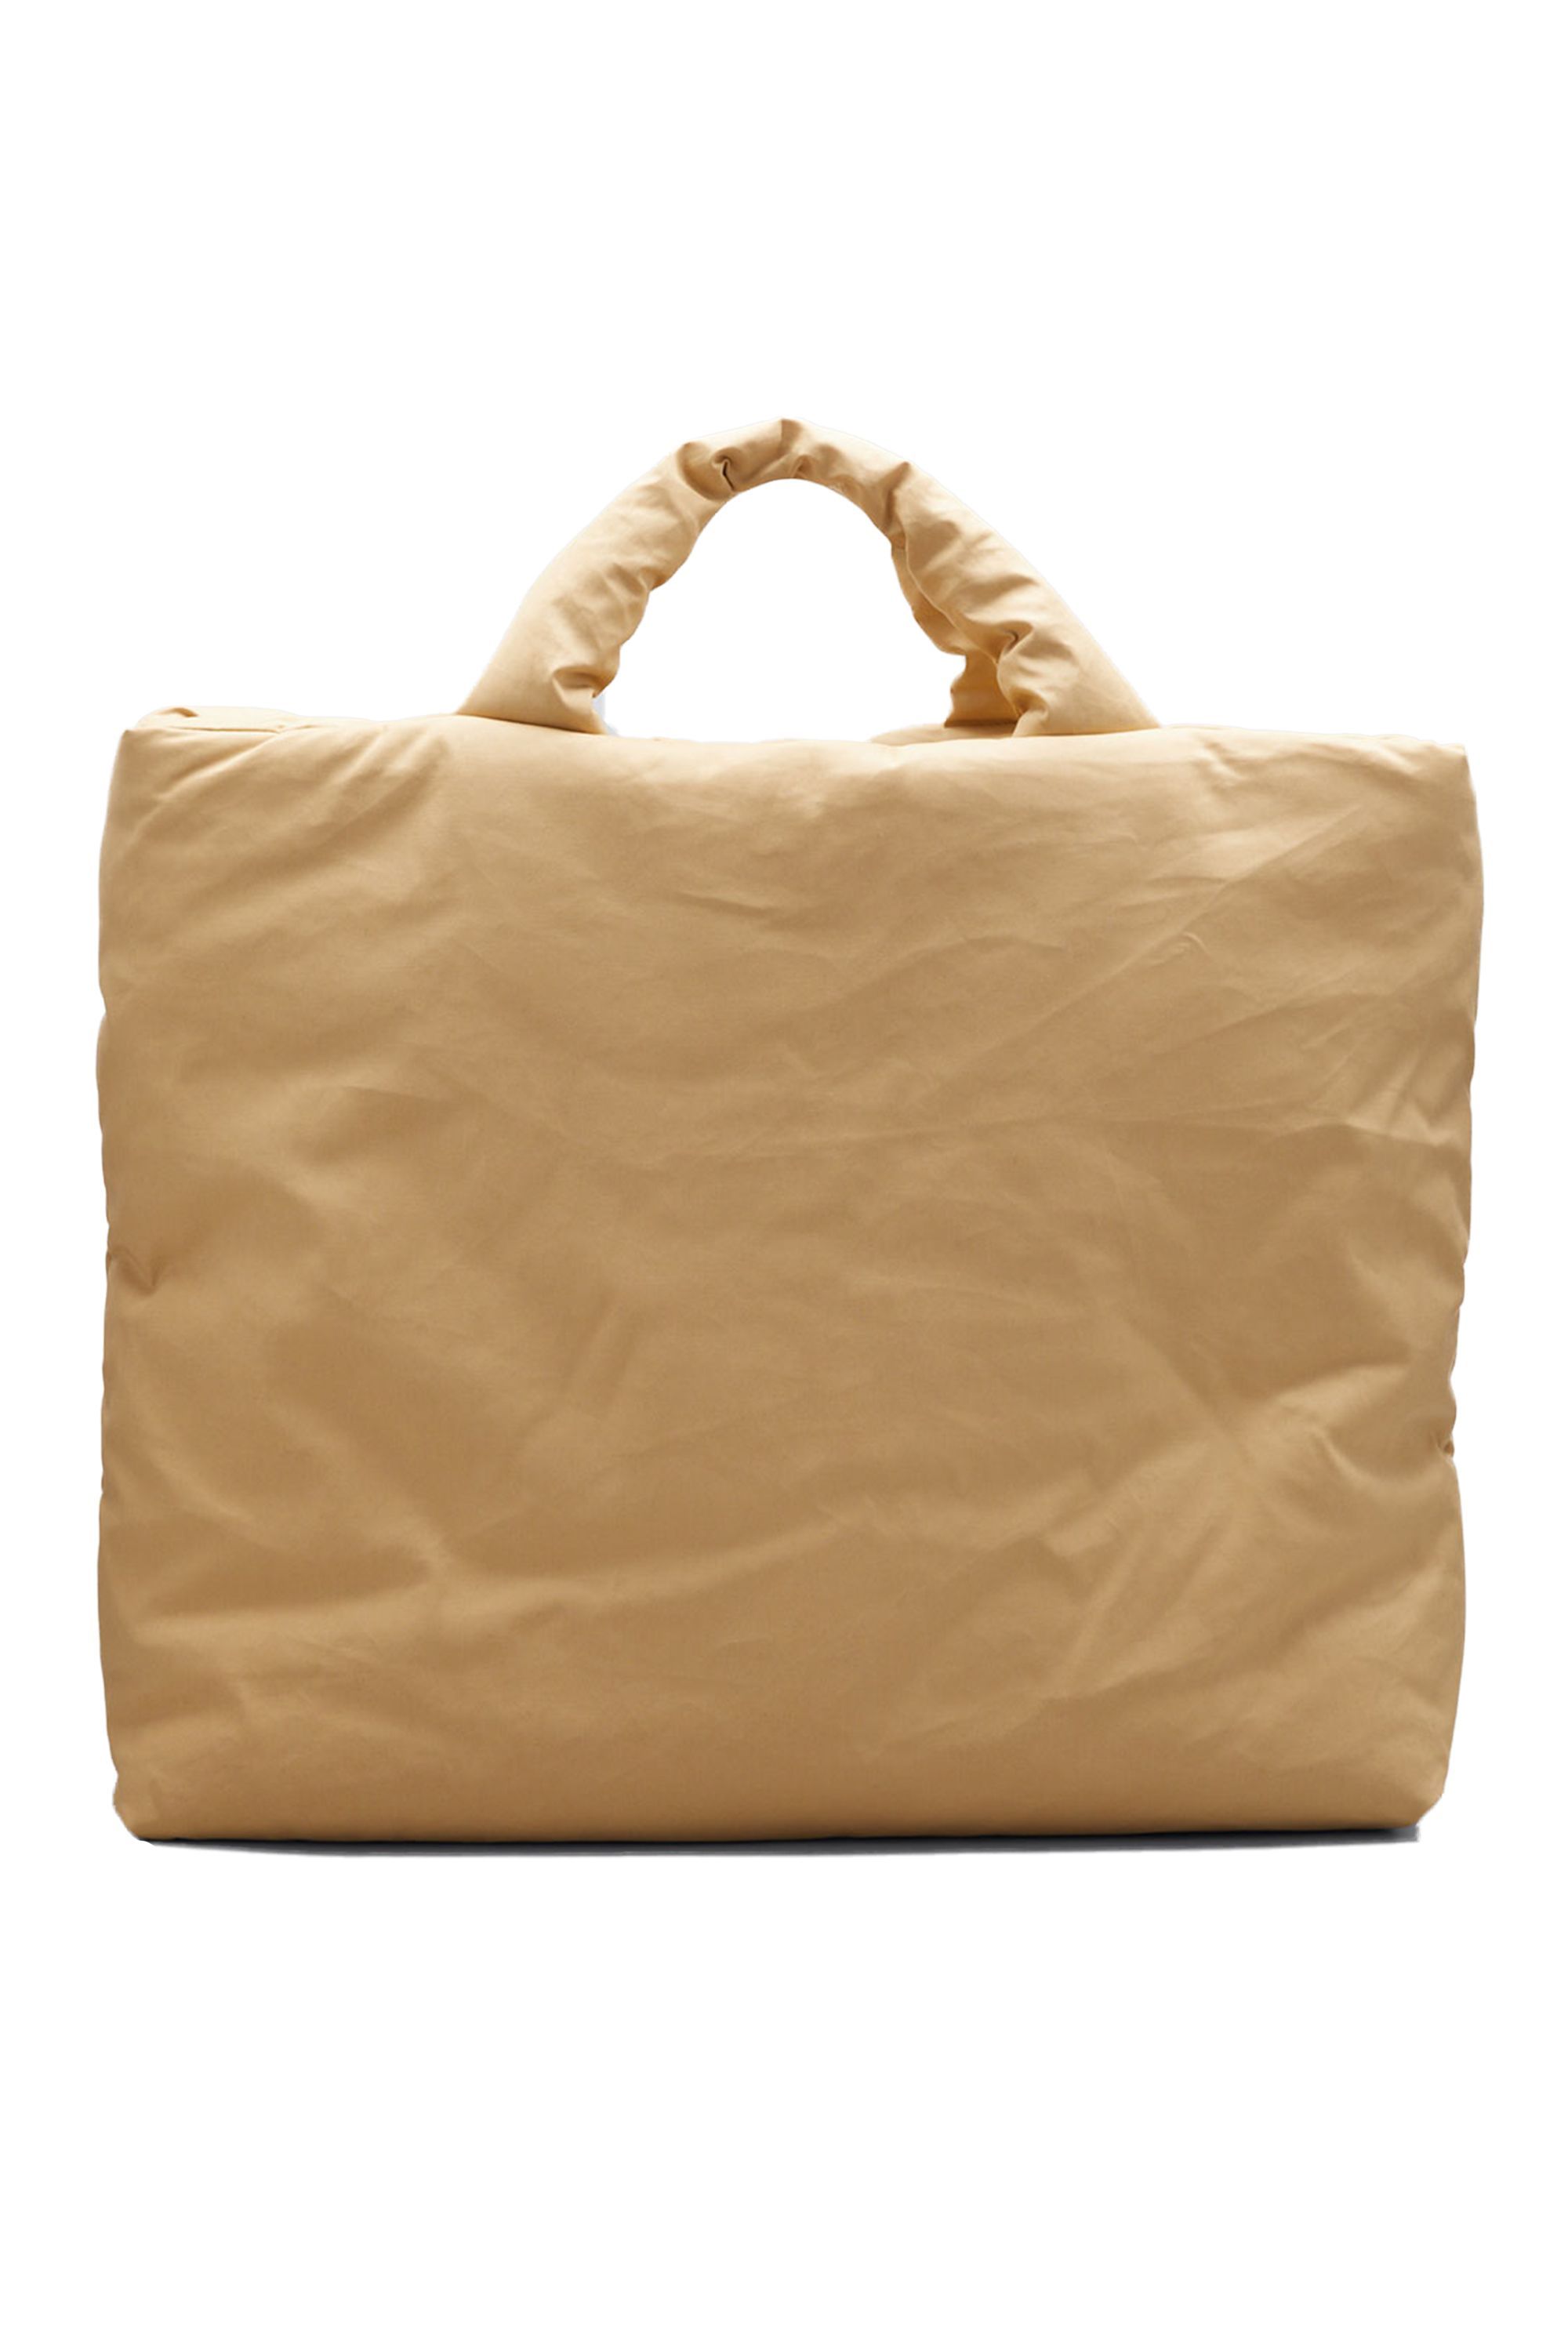 Truth of Touch Black Vegan Leather Tote Handbag Purse Shoulder Strap Medium NWT